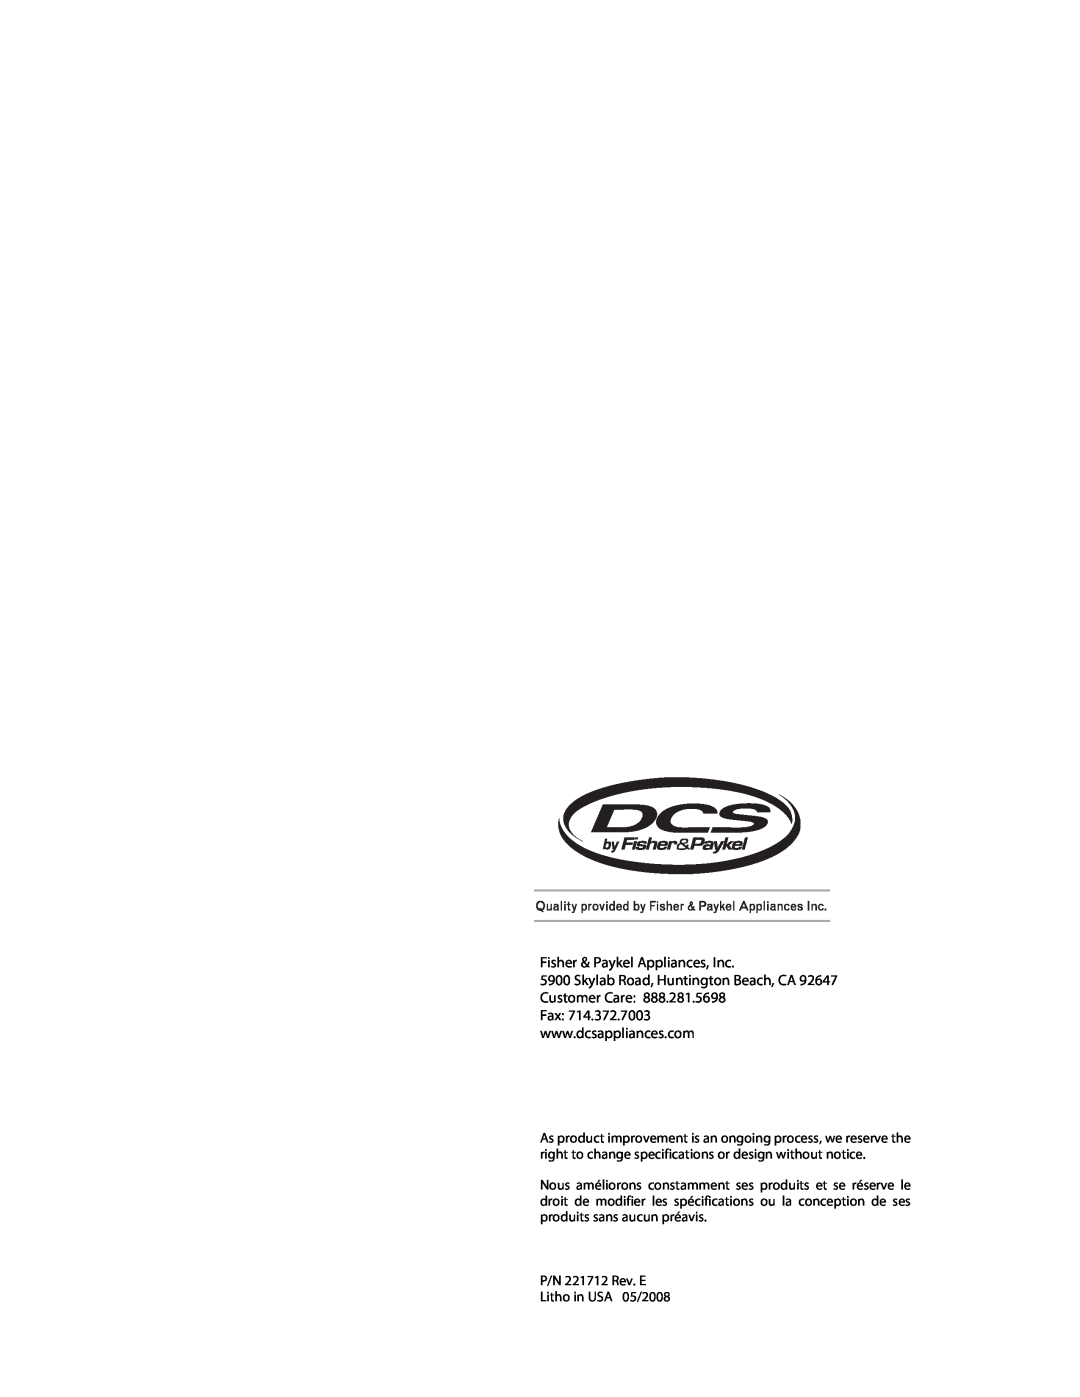 DCS 221712 manual Fisher & Paykel Appliances, Inc, Skylab Road, Huntington Beach, CA 92647 Customer Care 